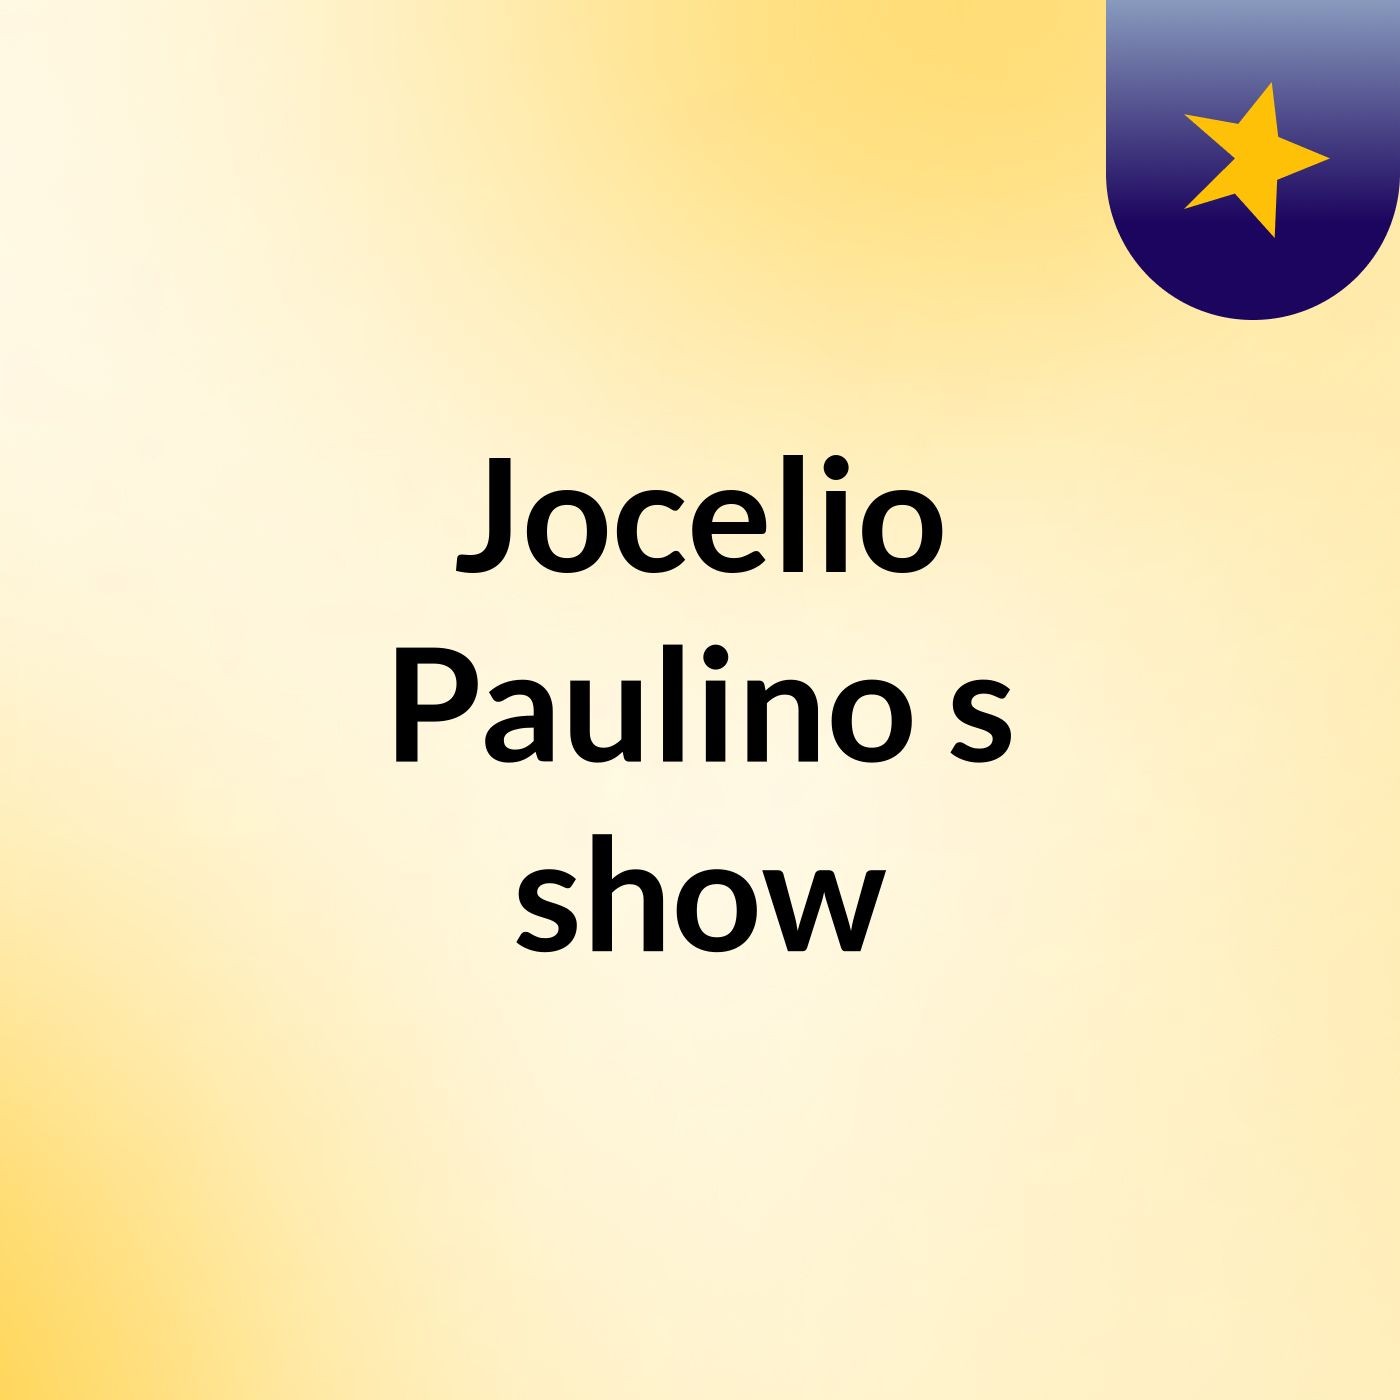 Jocelio Paulino's show